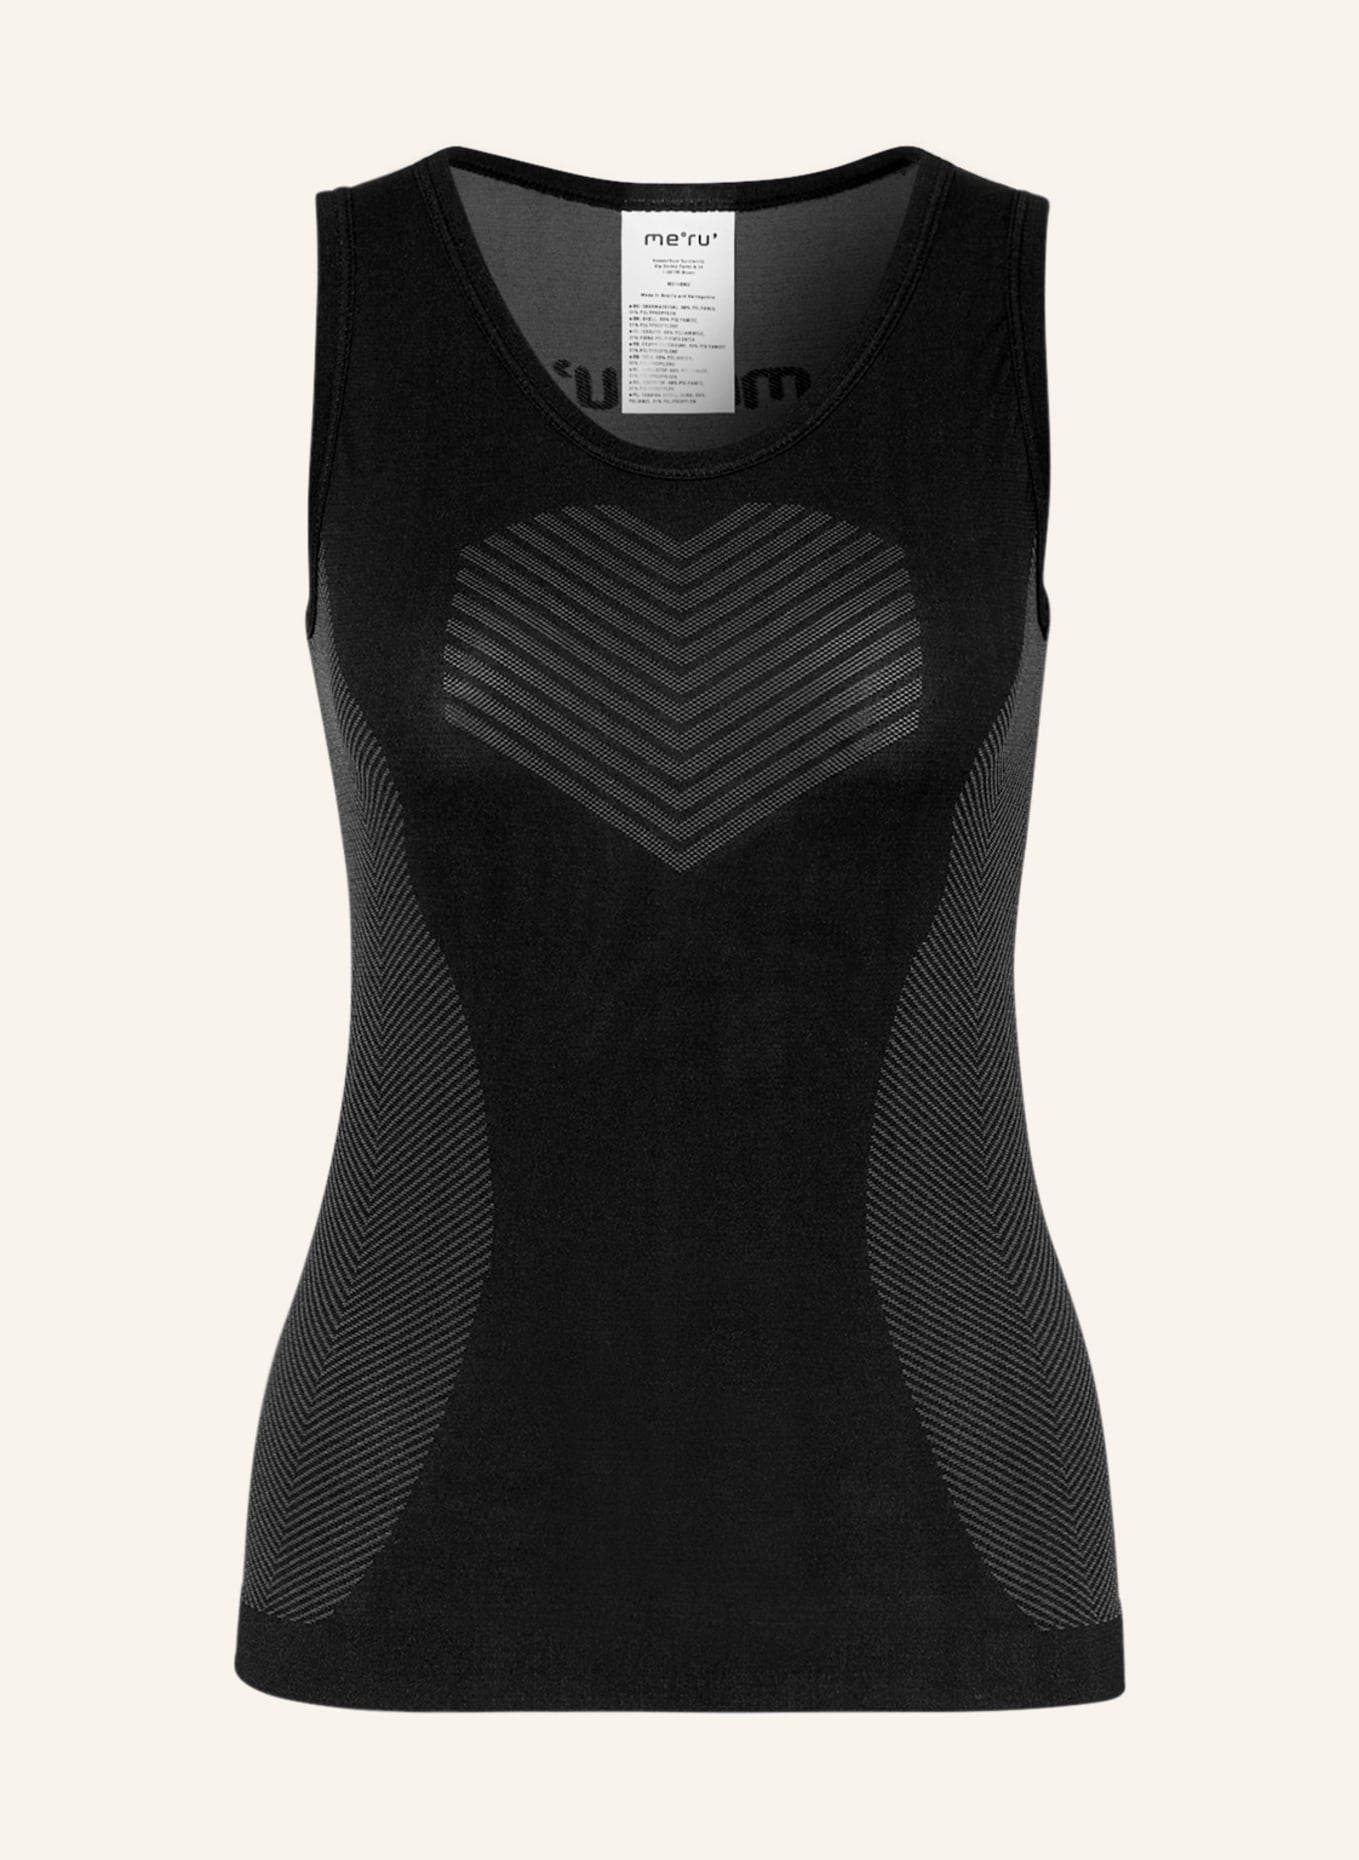 me°ru' Functional underwear shirt ATKA, Color: BLACK/ GRAY (Image 1)